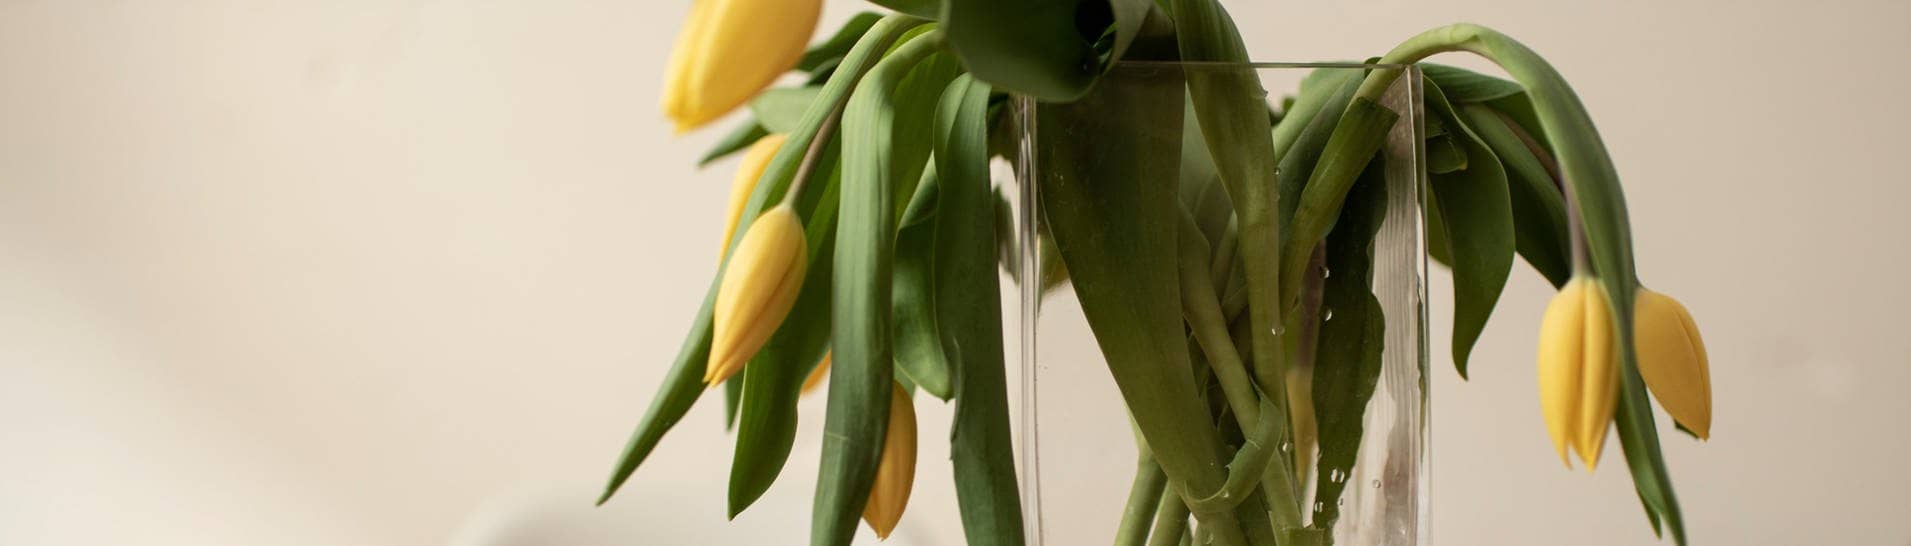 Tulpen in der Vase lassen den Kopf hängen